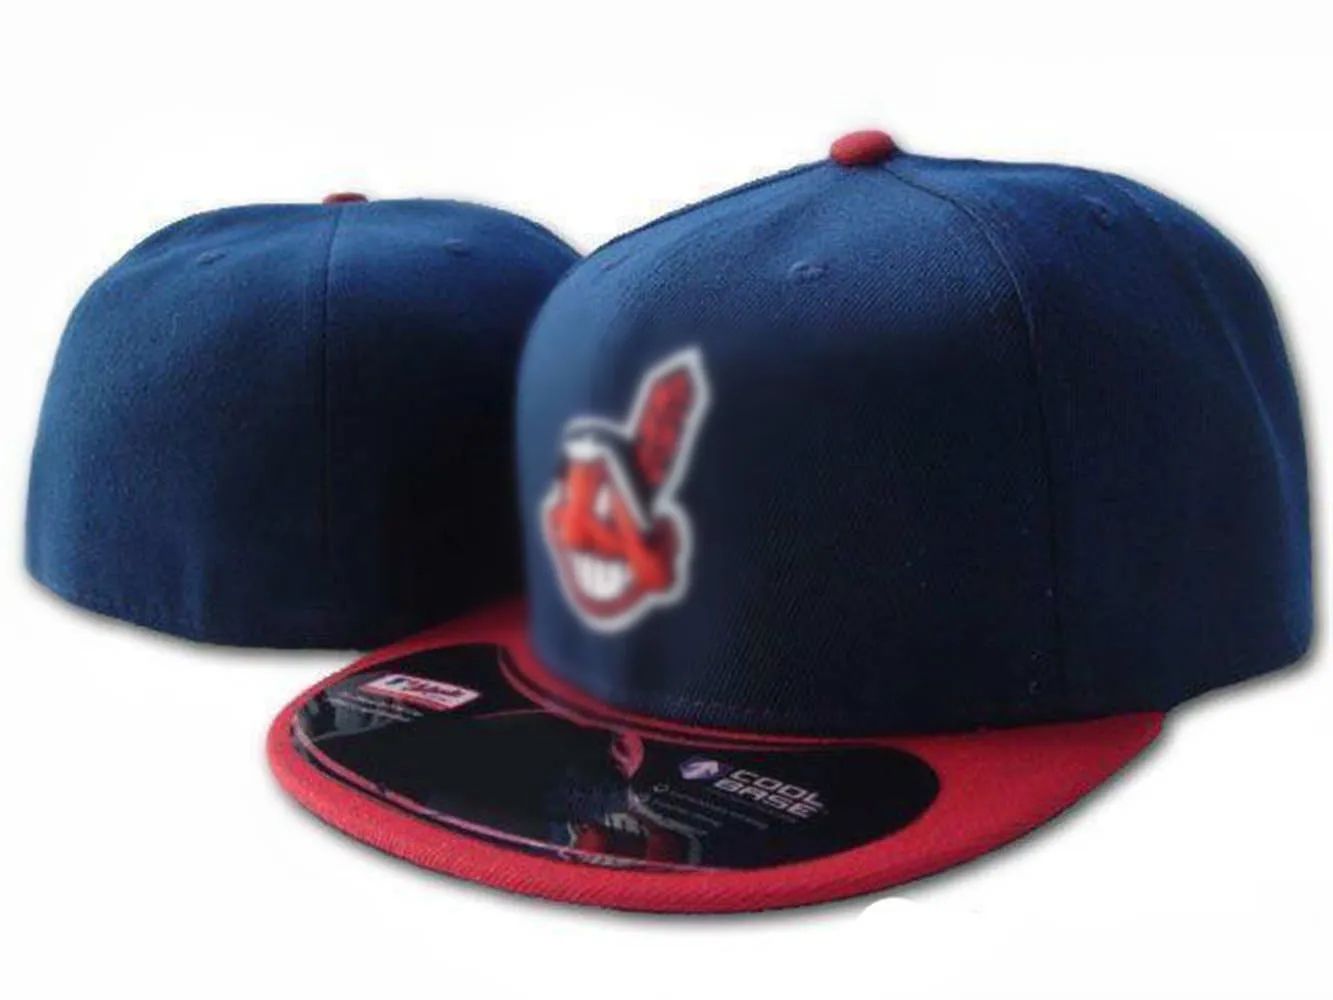 Bra kvalitet indianer Gorras Bones Baseball Caps 100% Cotton Men's Women Sun Hat Fashion Sports Fited Hats H5-8.9